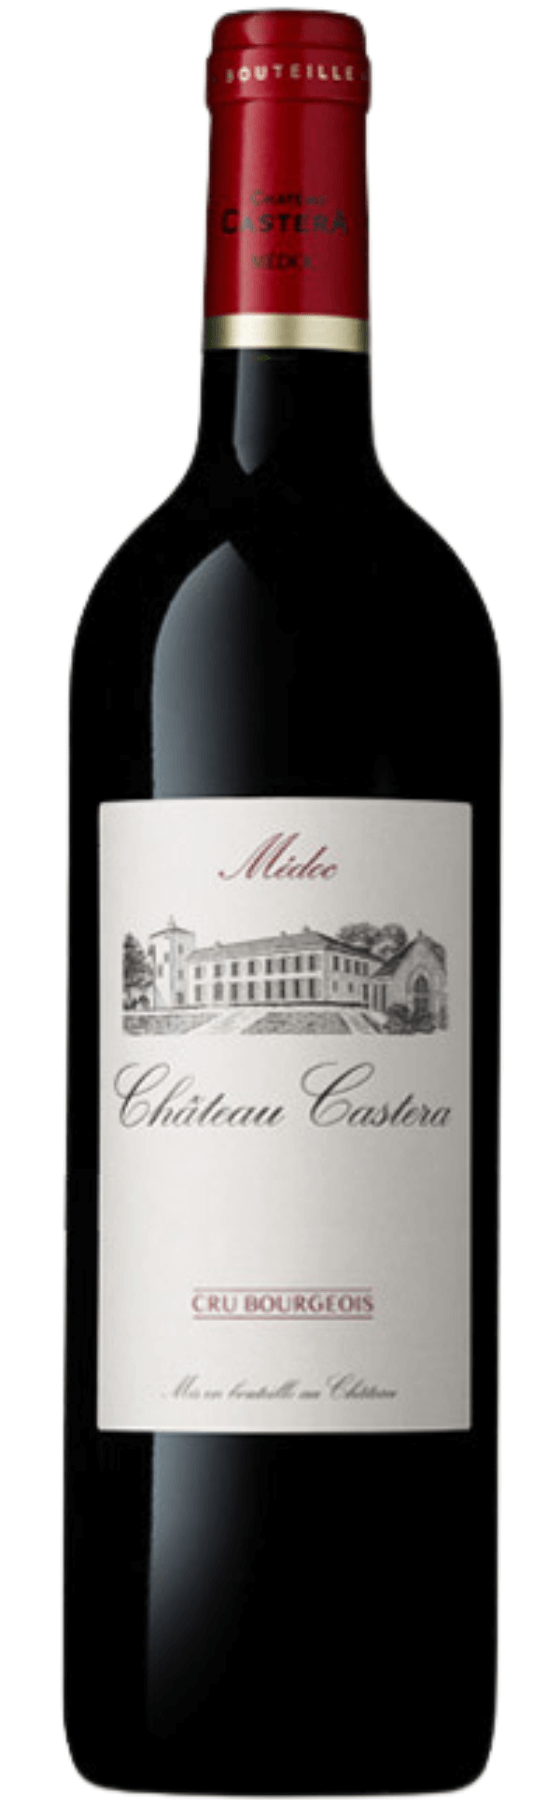 Château Castera Cru Bourgeois 2018 | Rotwein trocken Médoc Vinoscout | | 